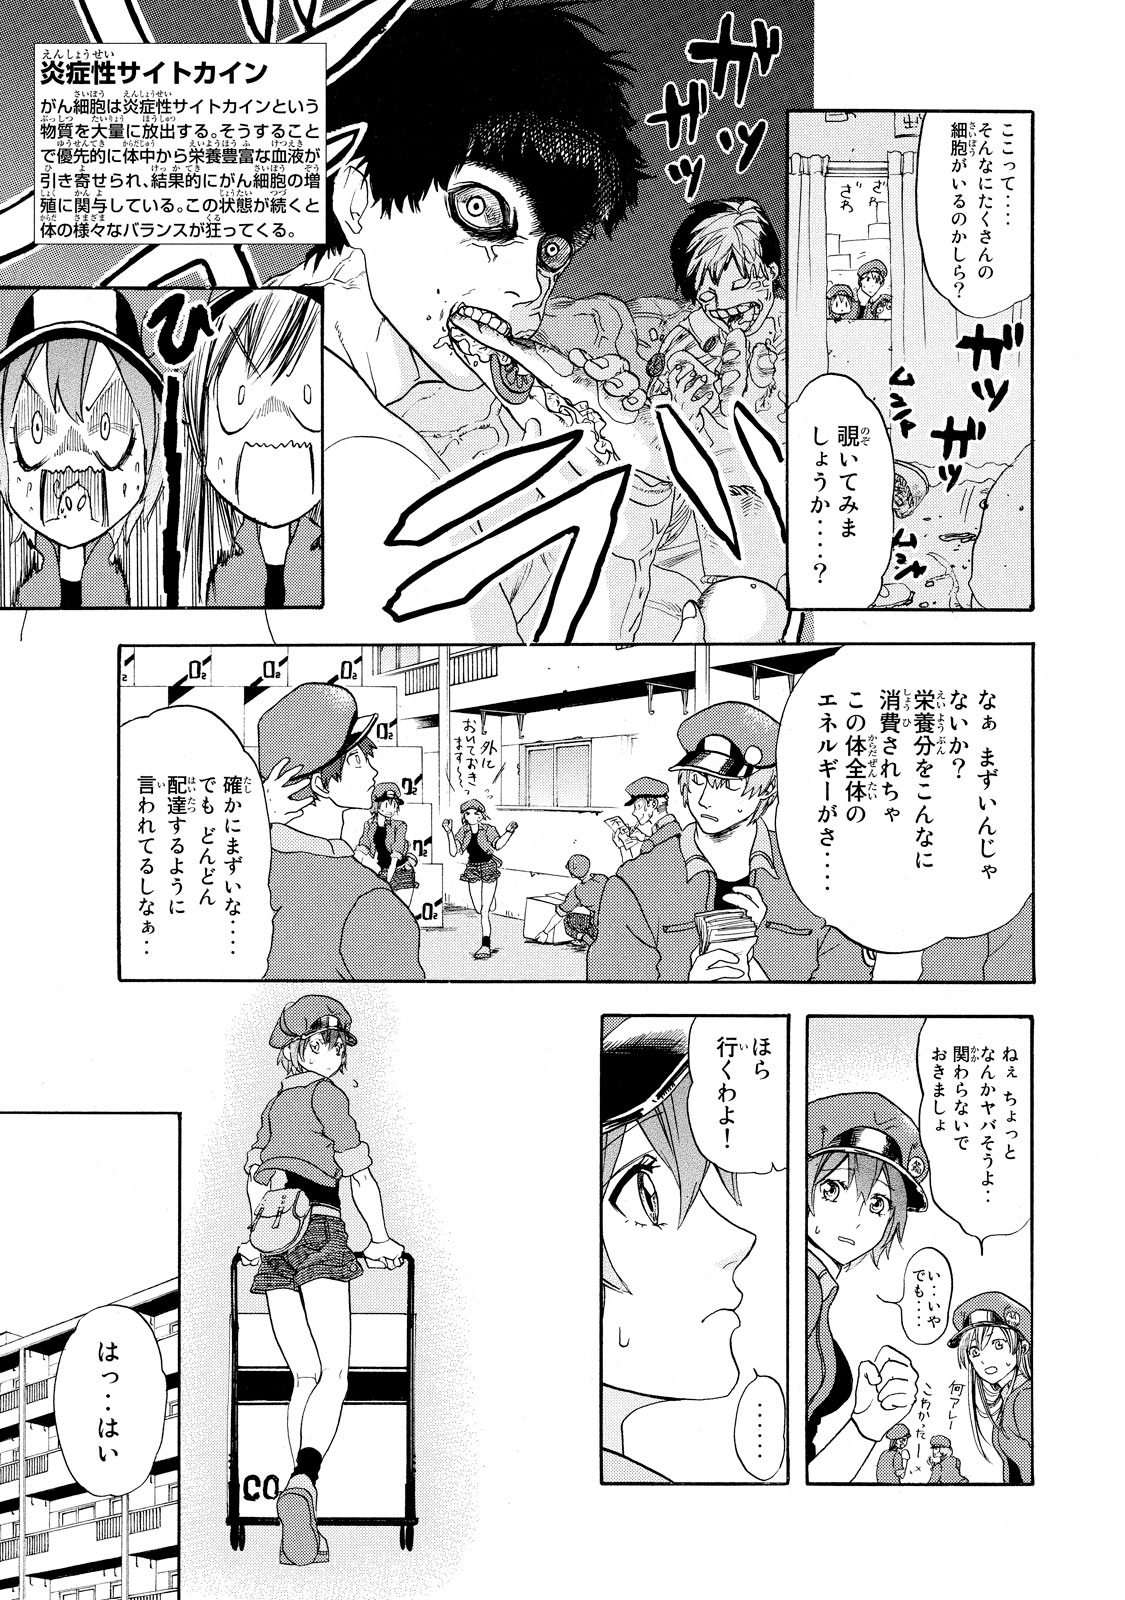 Hataraku Saibou - Chapter 9 - Page 22